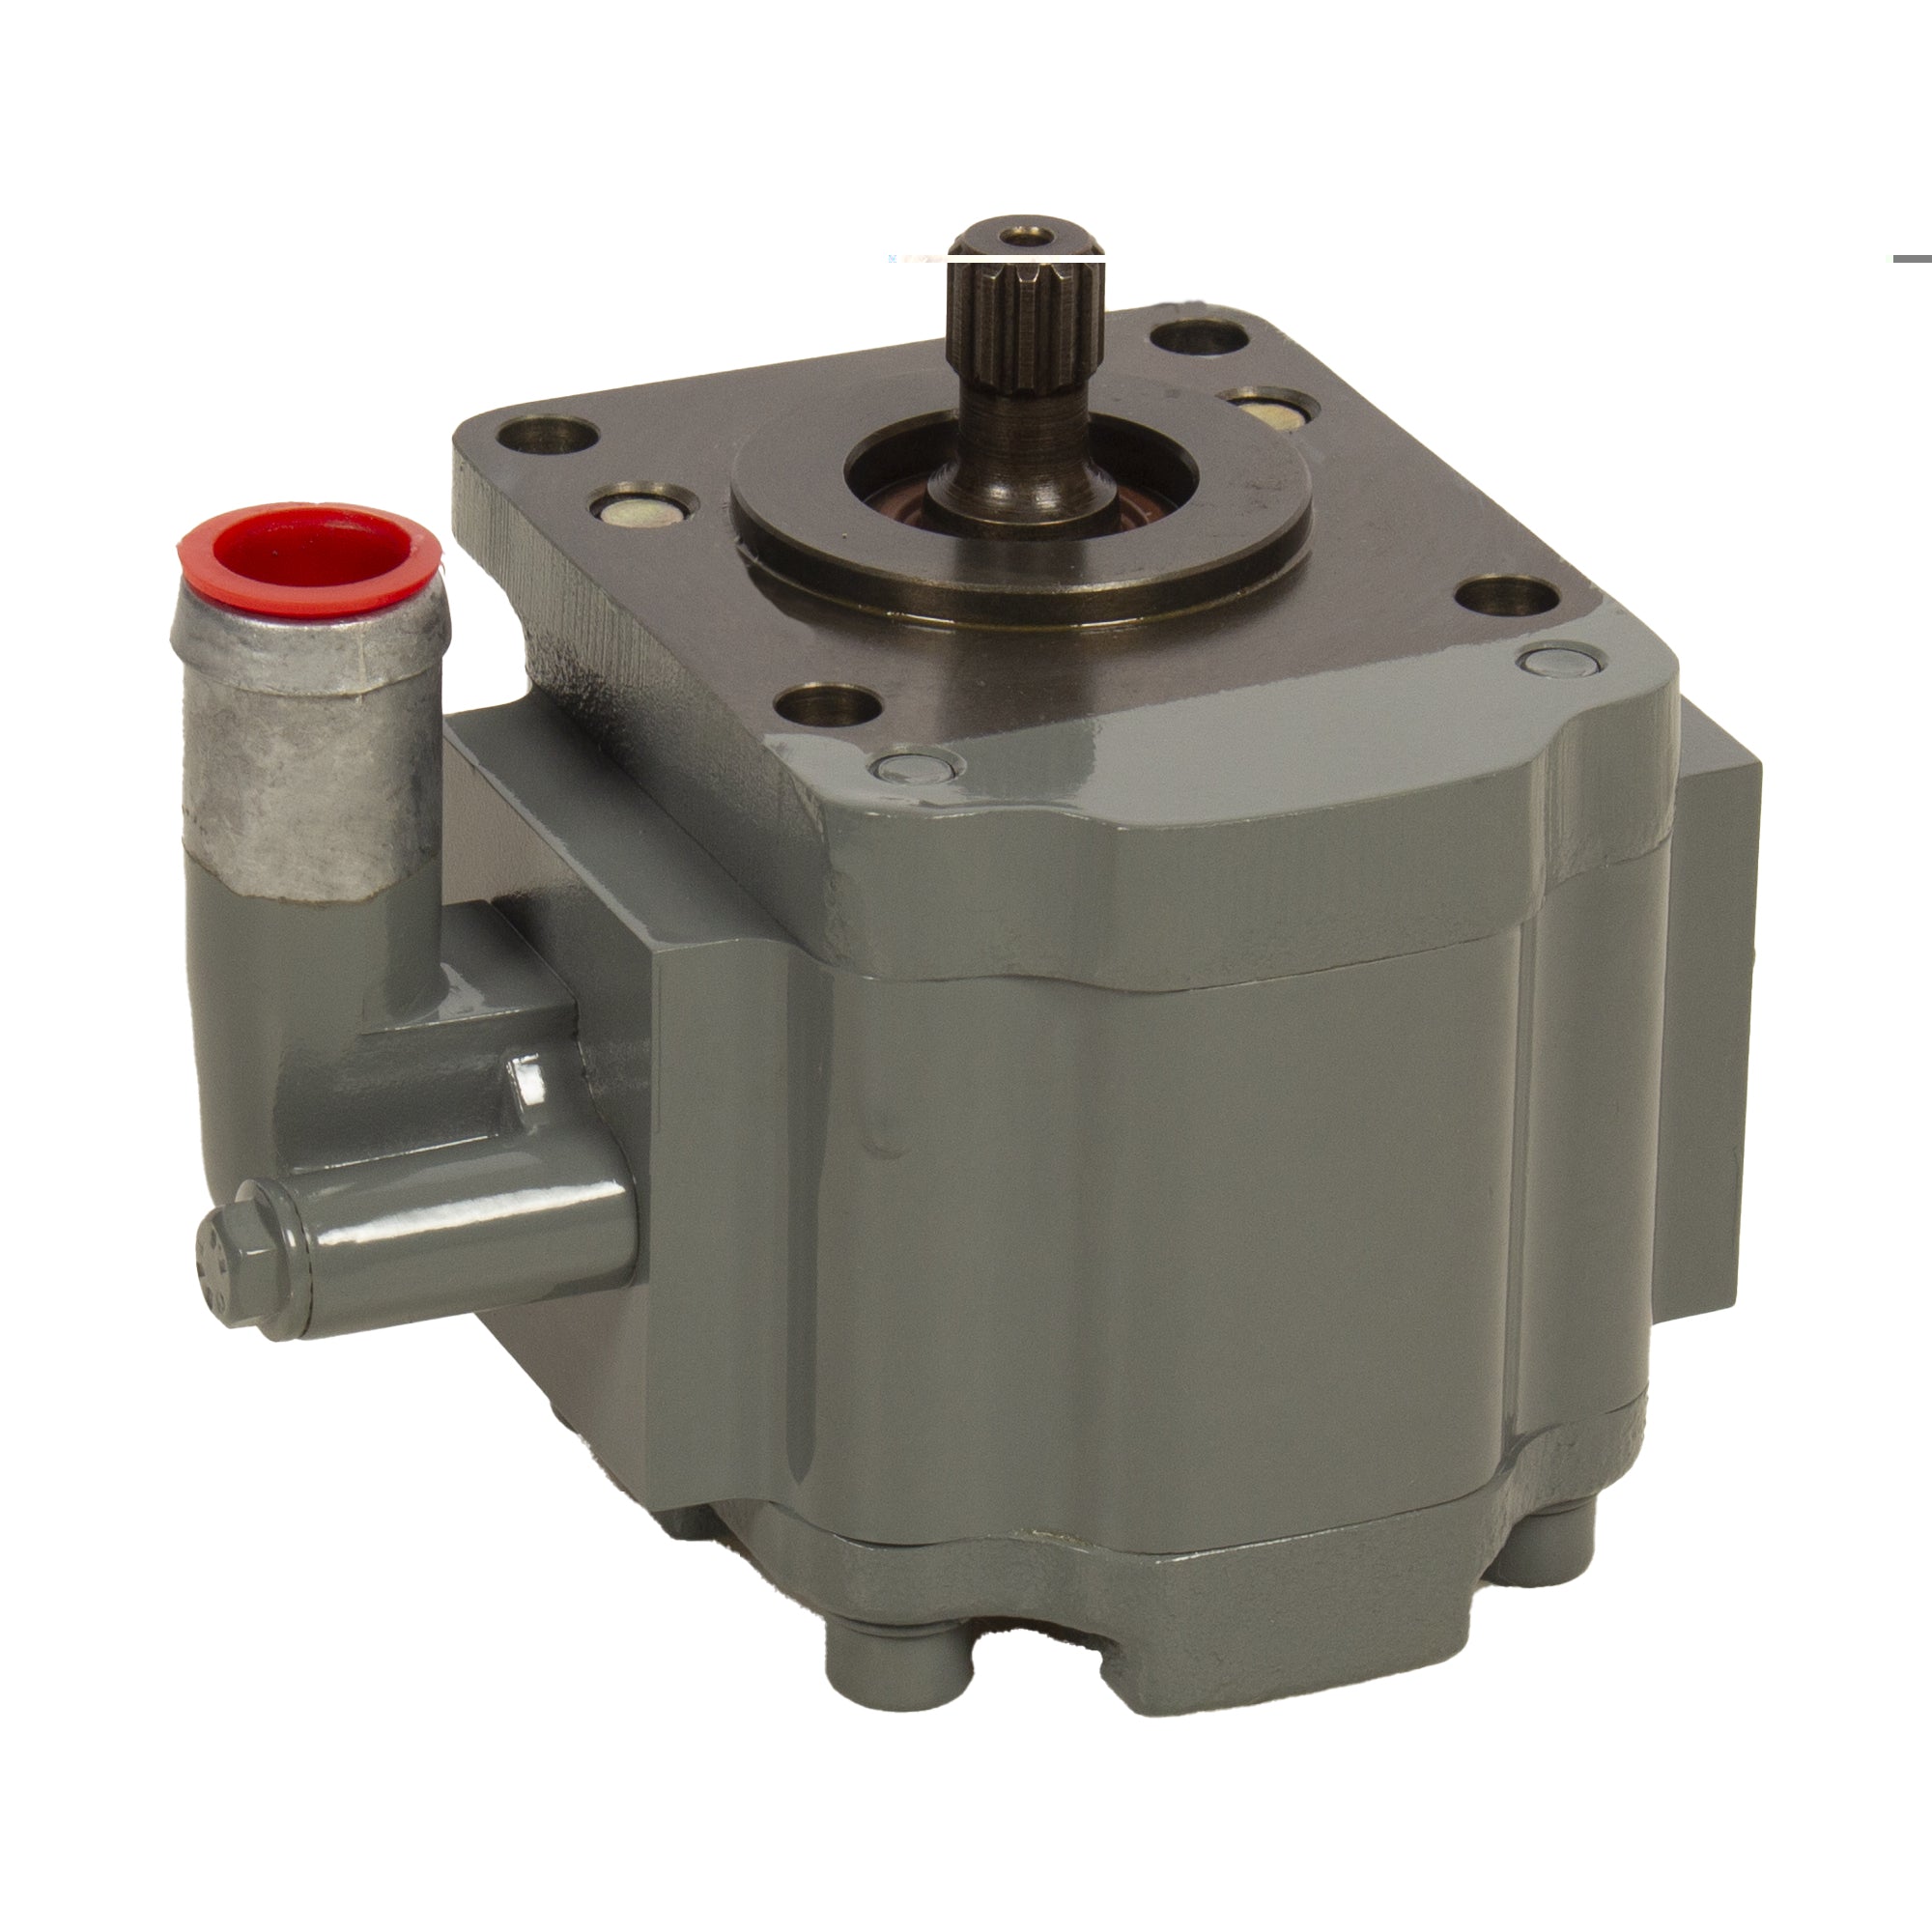 Power Steering Pump Replacement for JOHN DEERE 4200 4300 4400 4500 4600 LVA10330